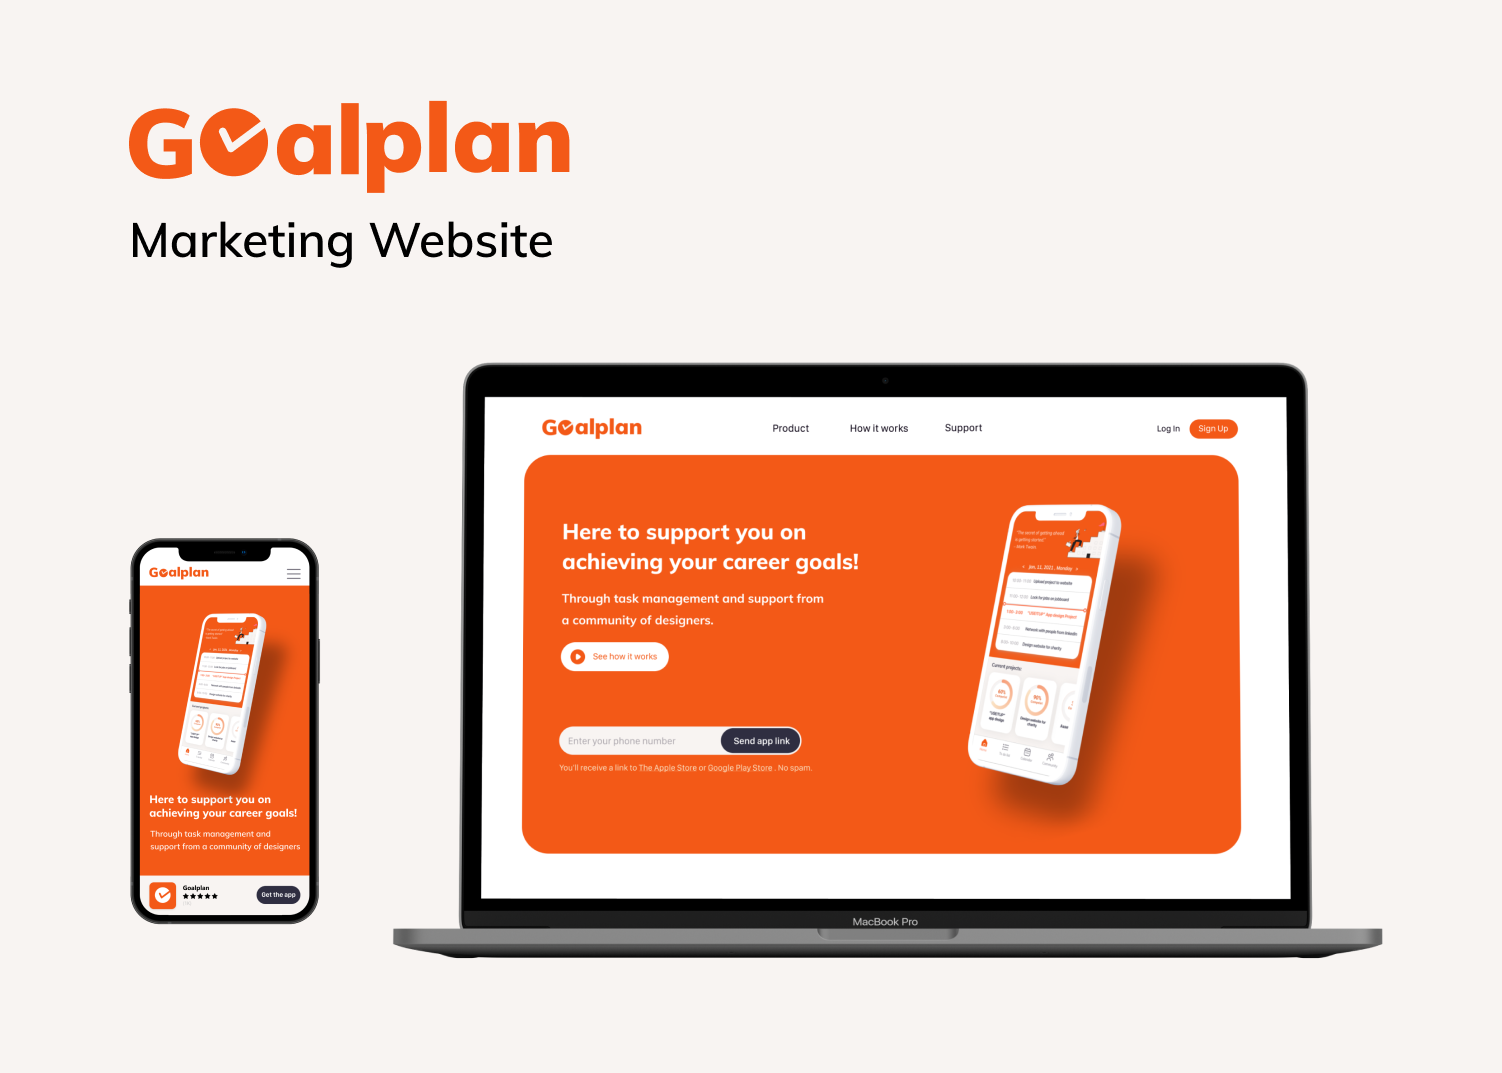 Marketing Website for Goalplan